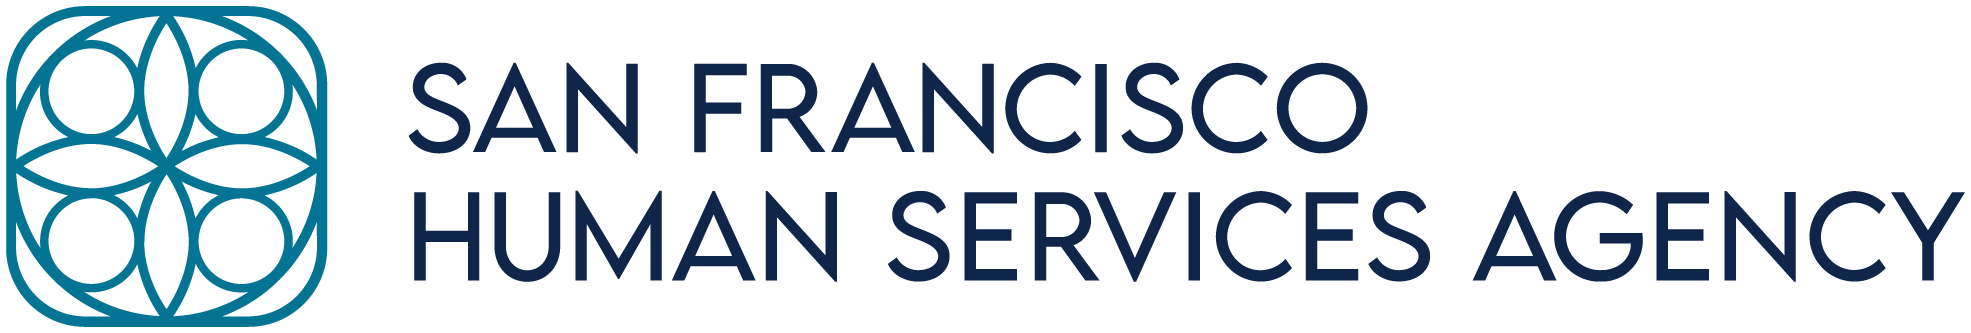 San Francisco Human Services Agency Logo